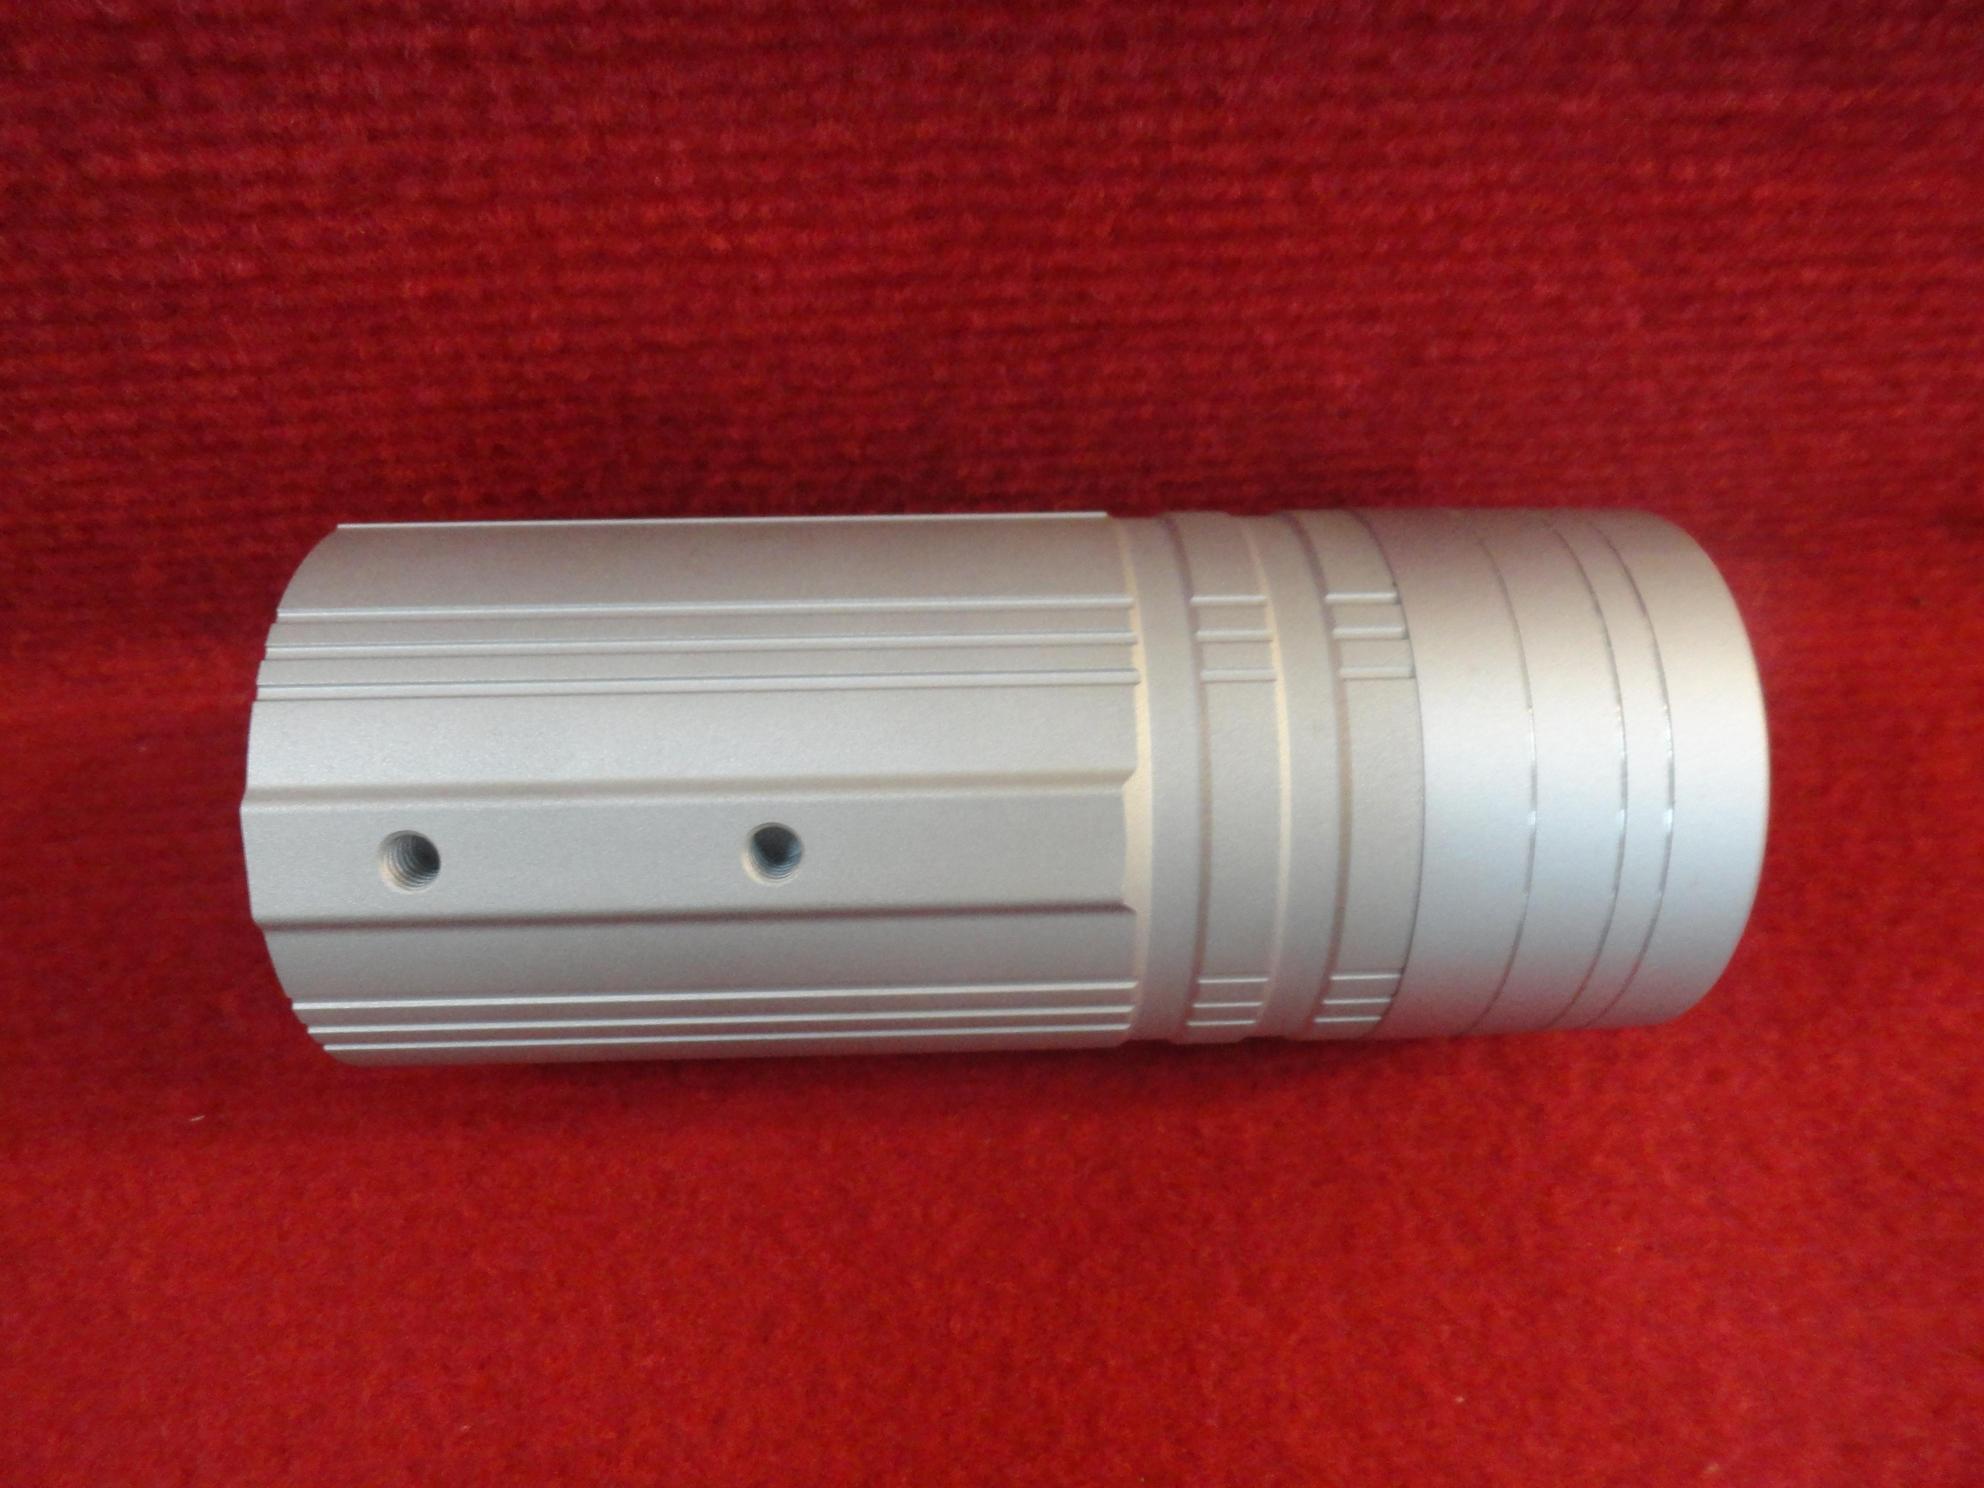 Surveillance camera aluminum shell